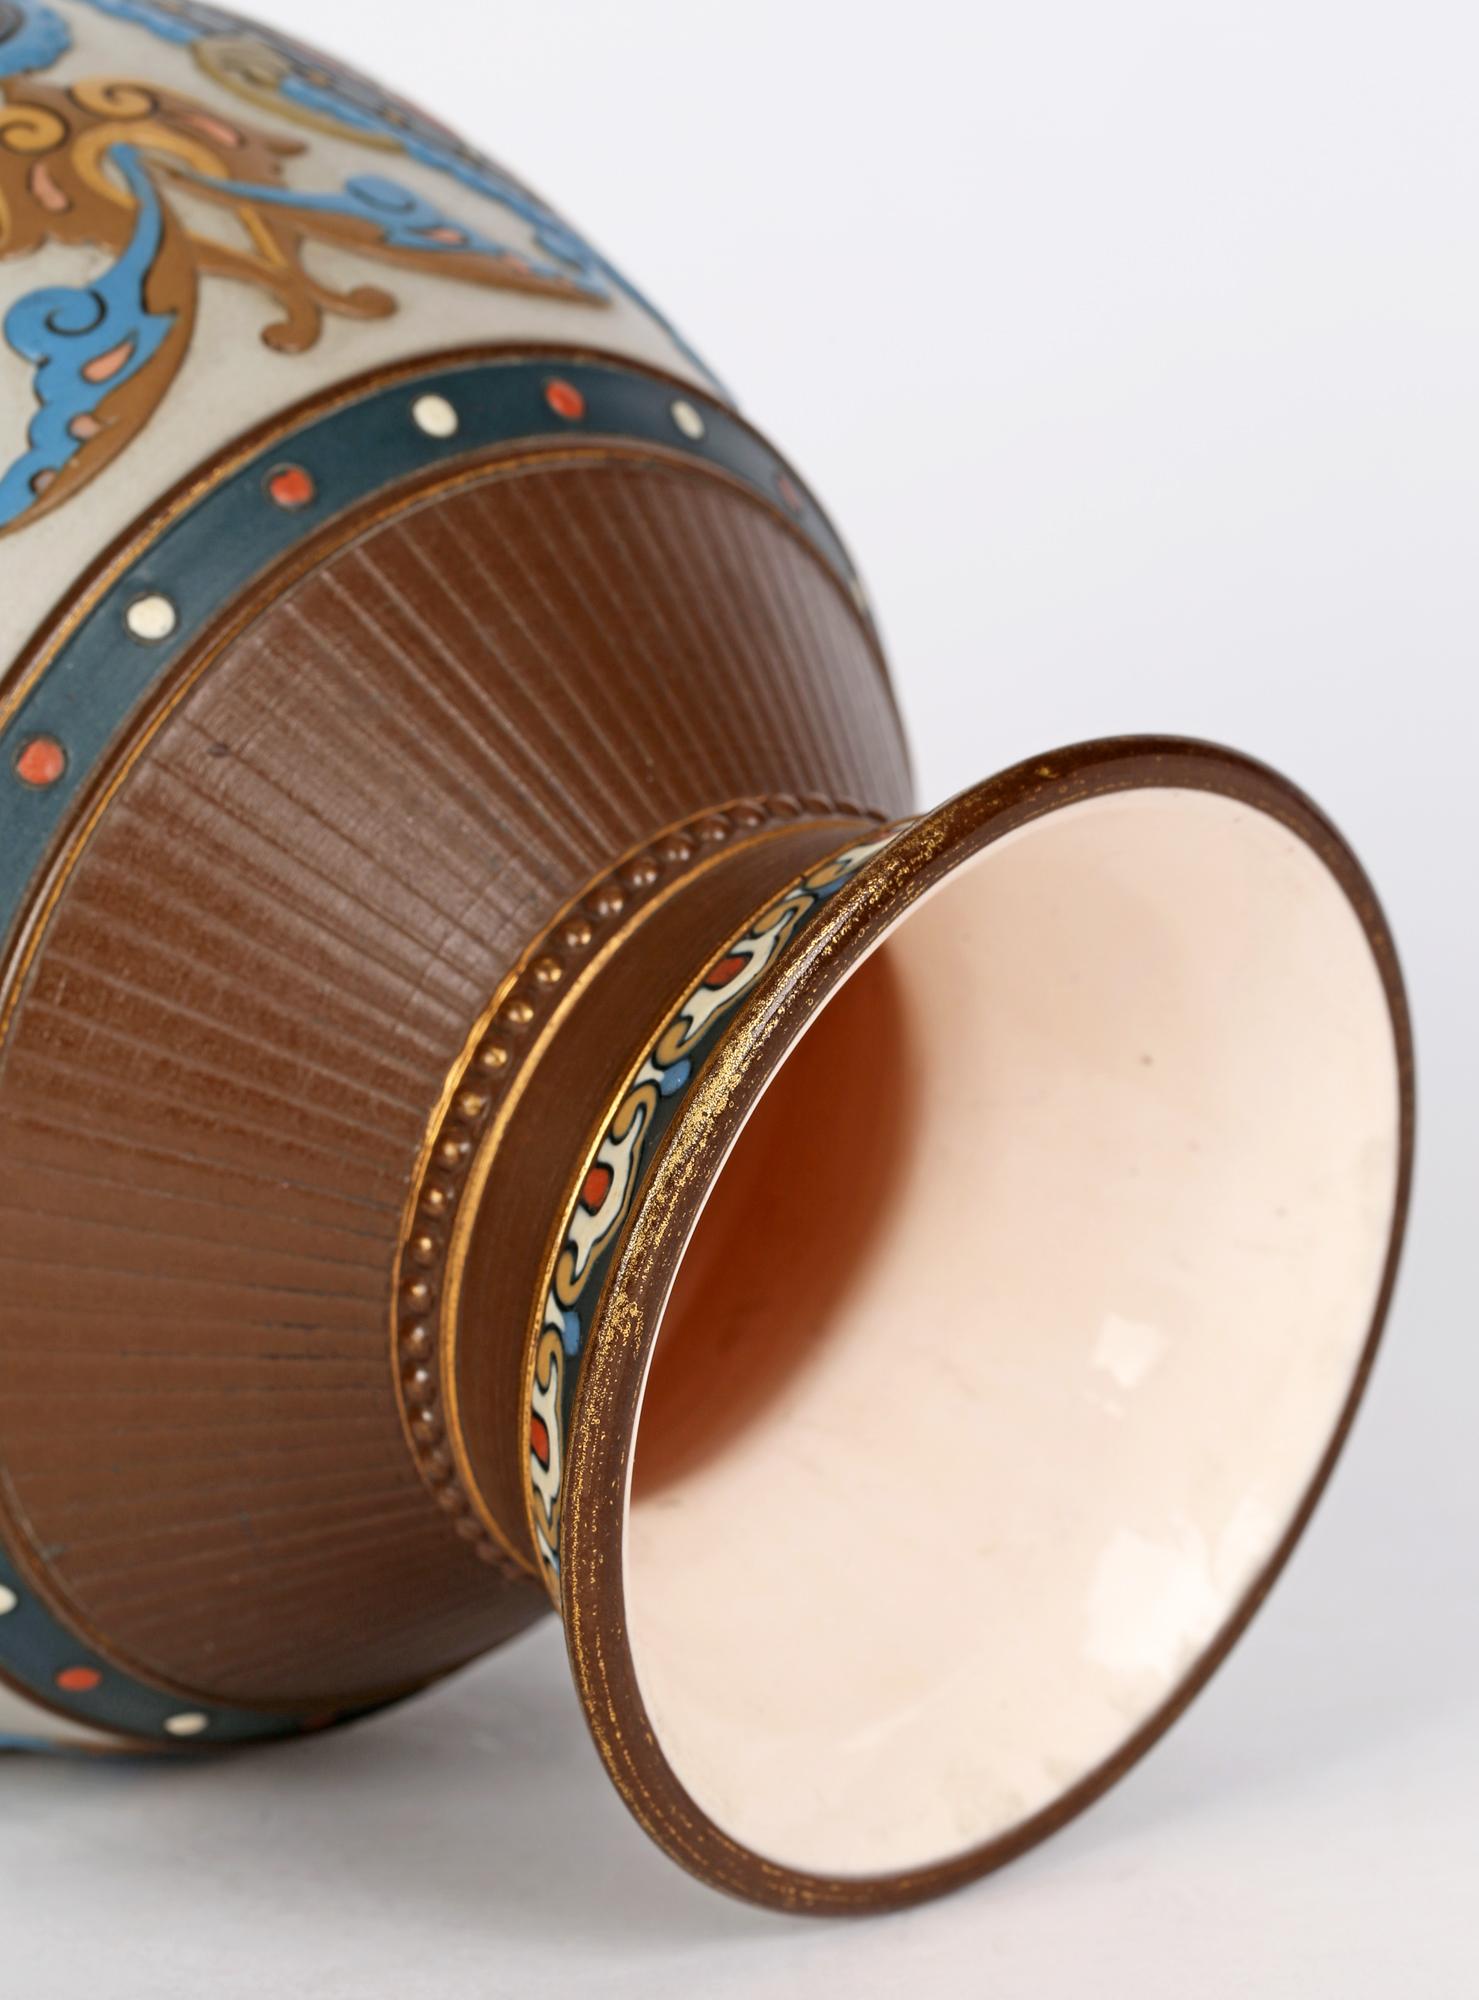 Villeroy & Boch Mettlach Enameled Islamic Design Art Pottery Vase 4